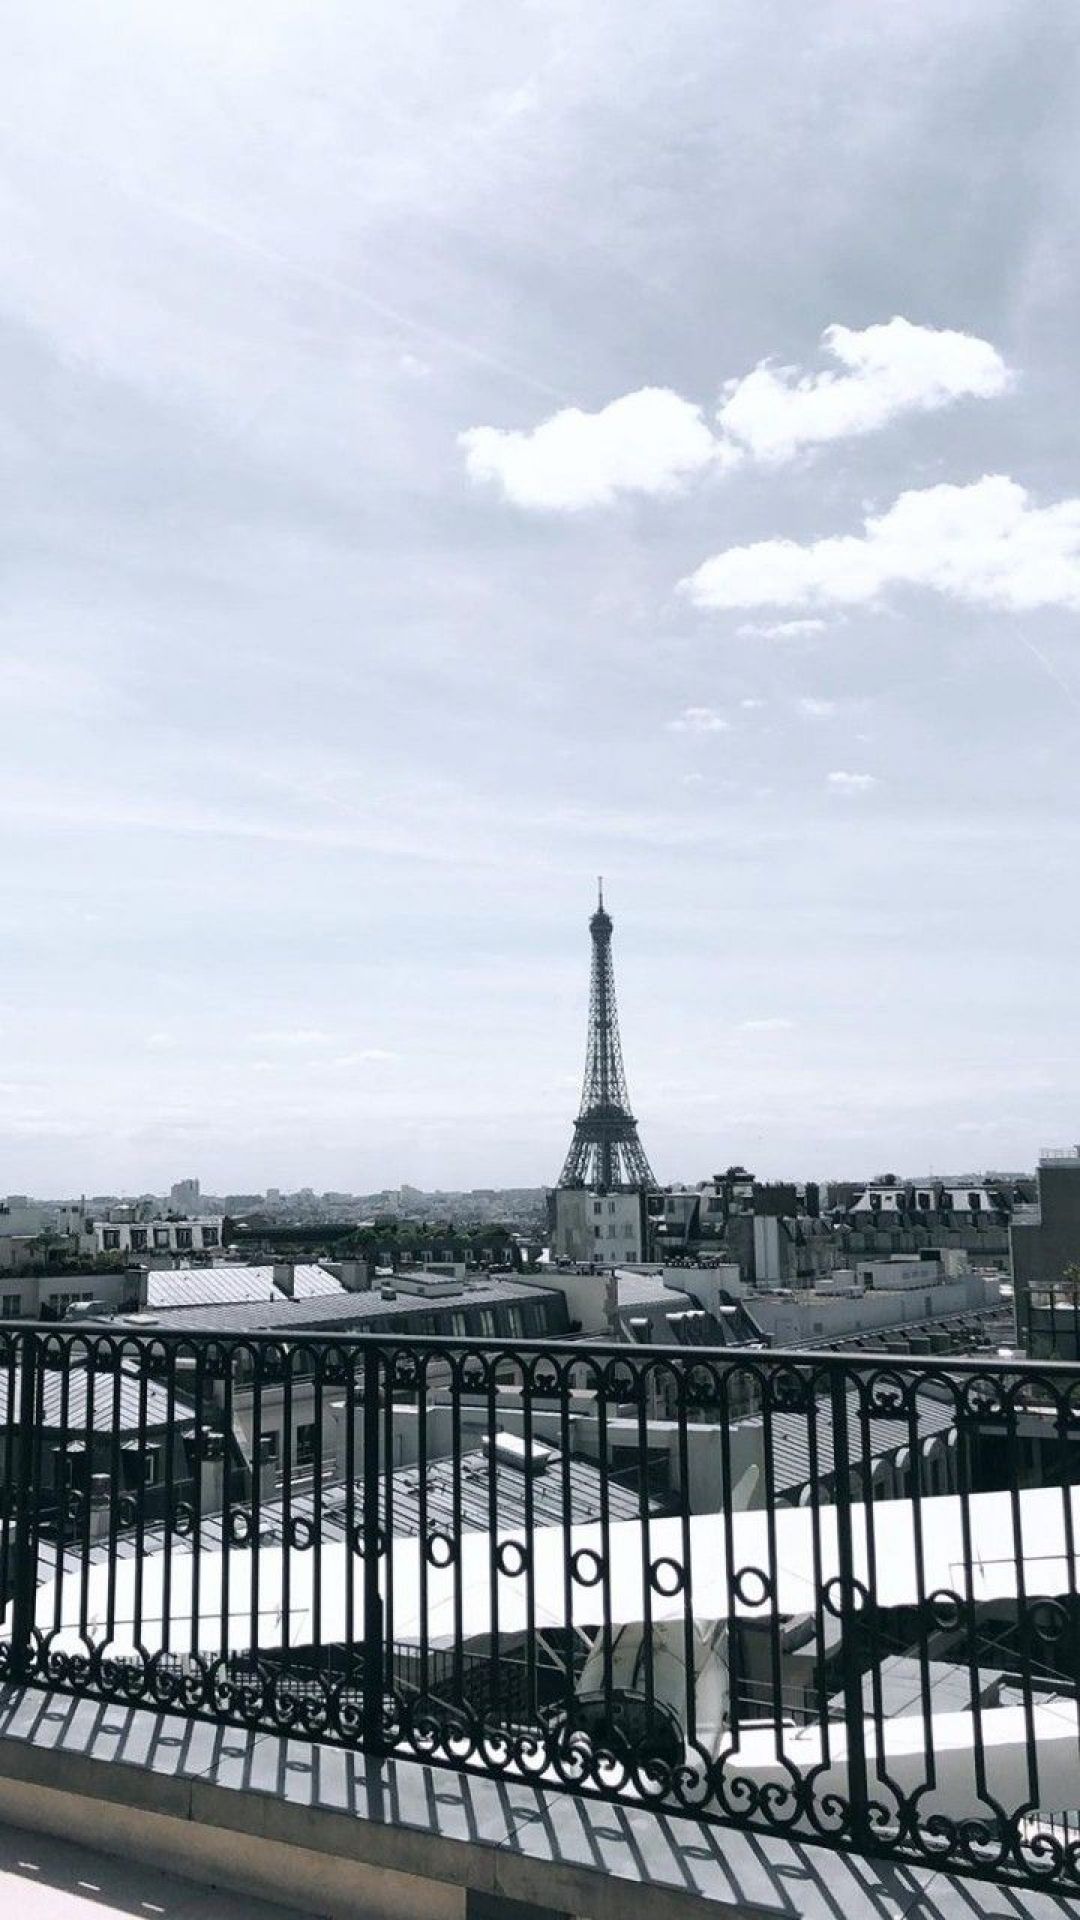 wallpaper #tumblr #aesthetics #grey #paris #eiffel tower / iPhone HD Wallpaper Background Download HD Wallpaper (Desktop Background / Android / iPhone) (1080p, 4k) (1080x1920) (2021)